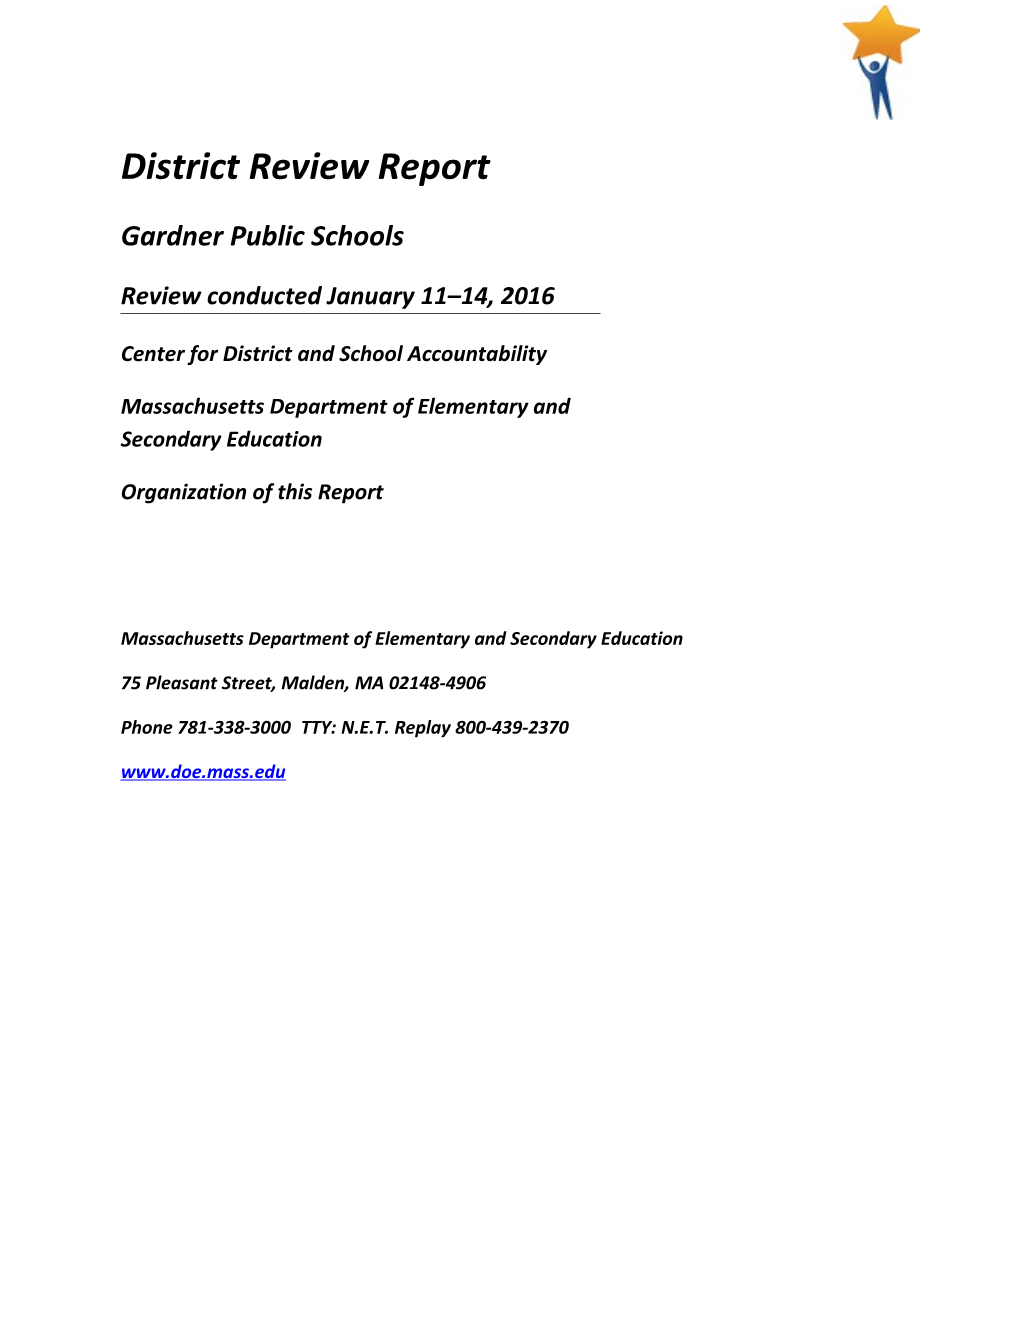 Gardner District Review Report - 2016